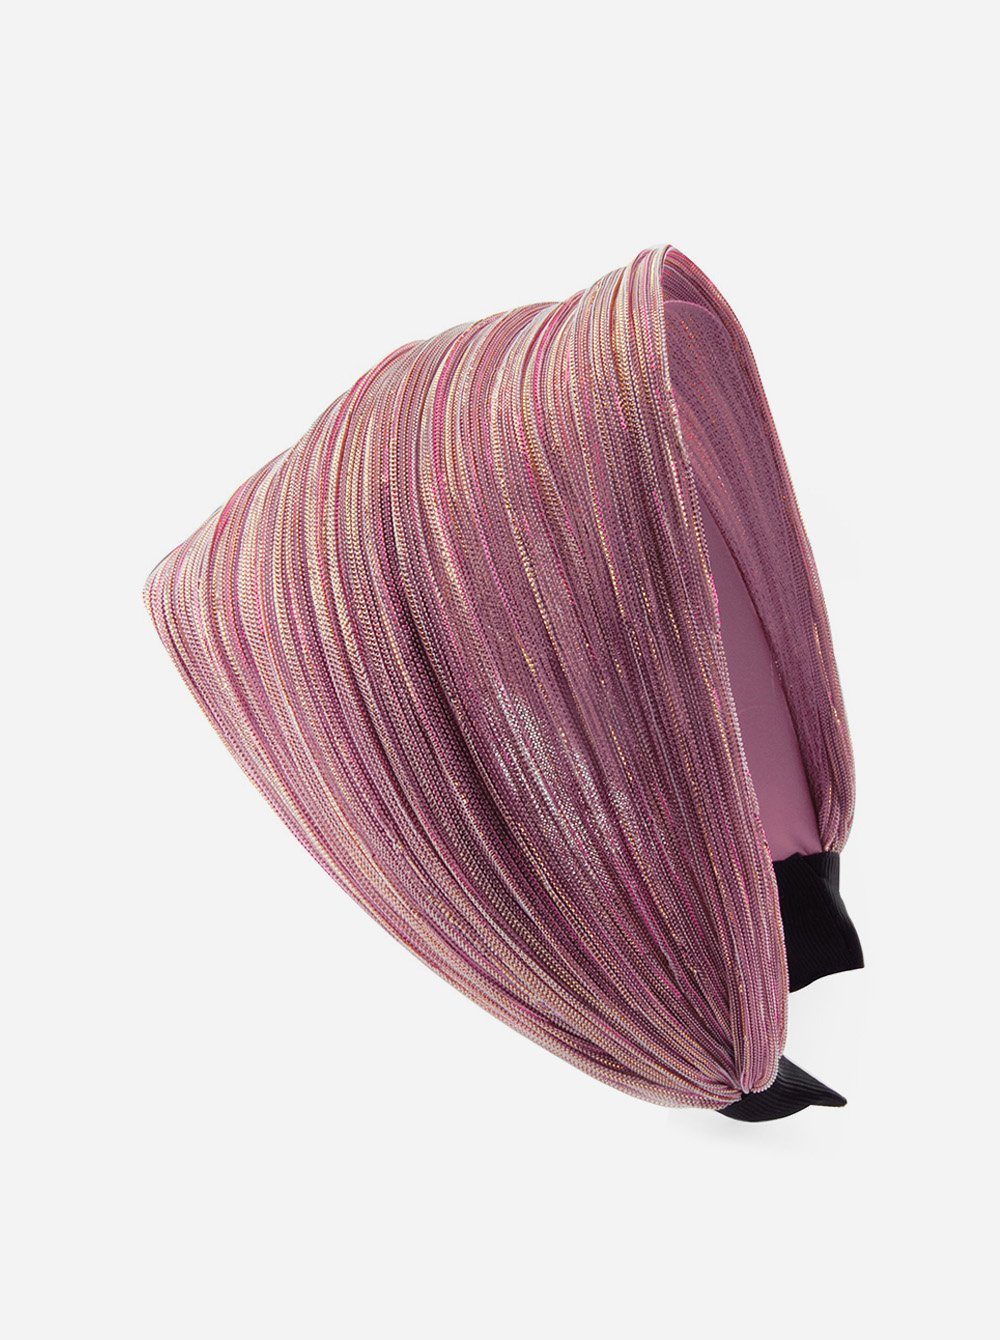 axy Haarreif auffallenden Damen mit Haarreif Pink in Haarreif Haarband Breiter Breiter Glitzerfäden Tuchoptik, mit Haarreifen Glitzerfäden